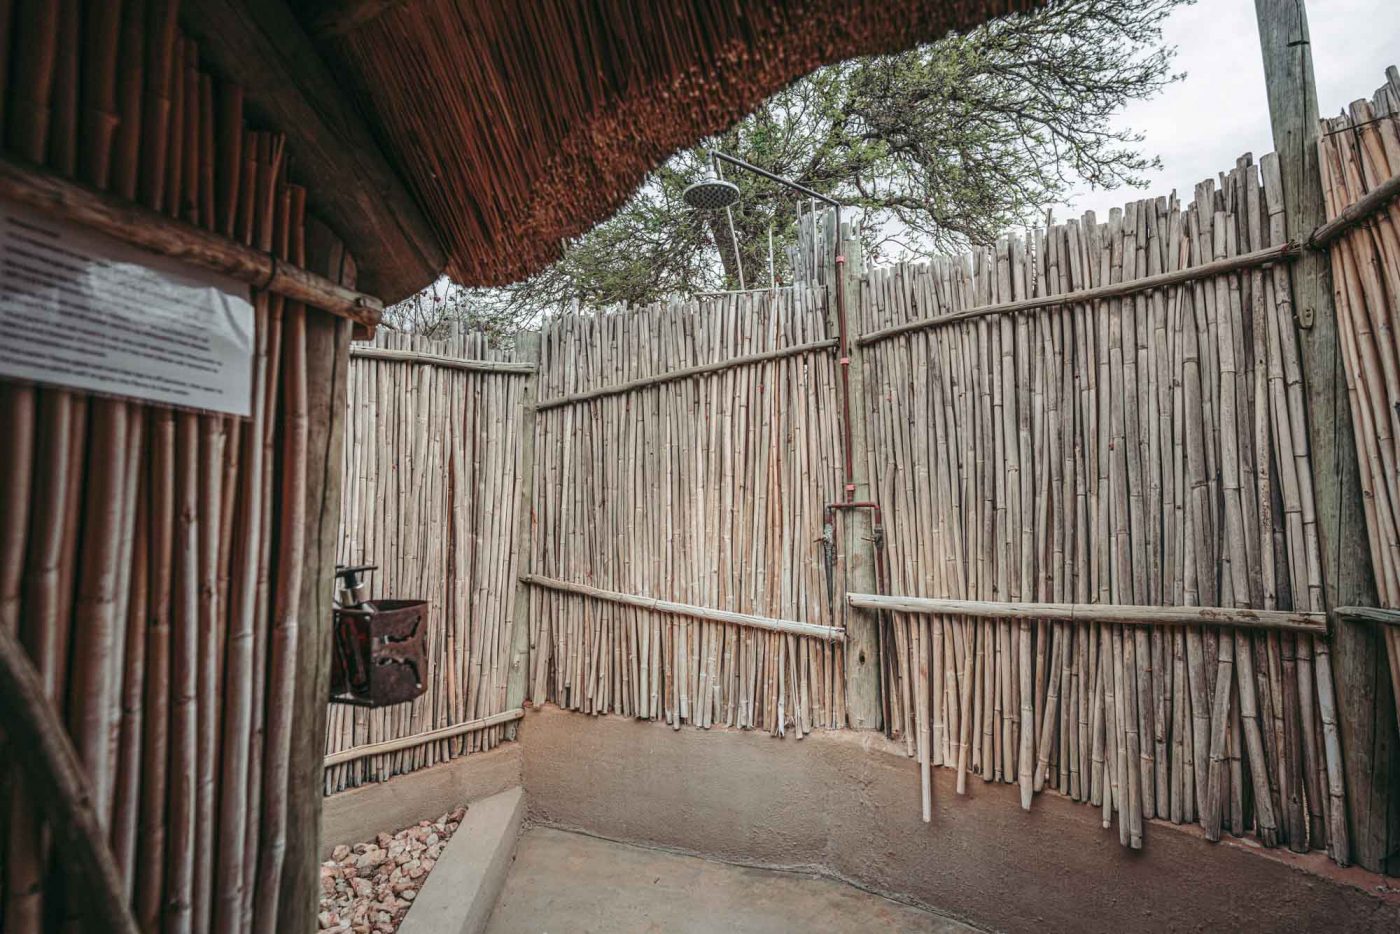 Outdoor shower inside the huts at Umlani Bush Camp